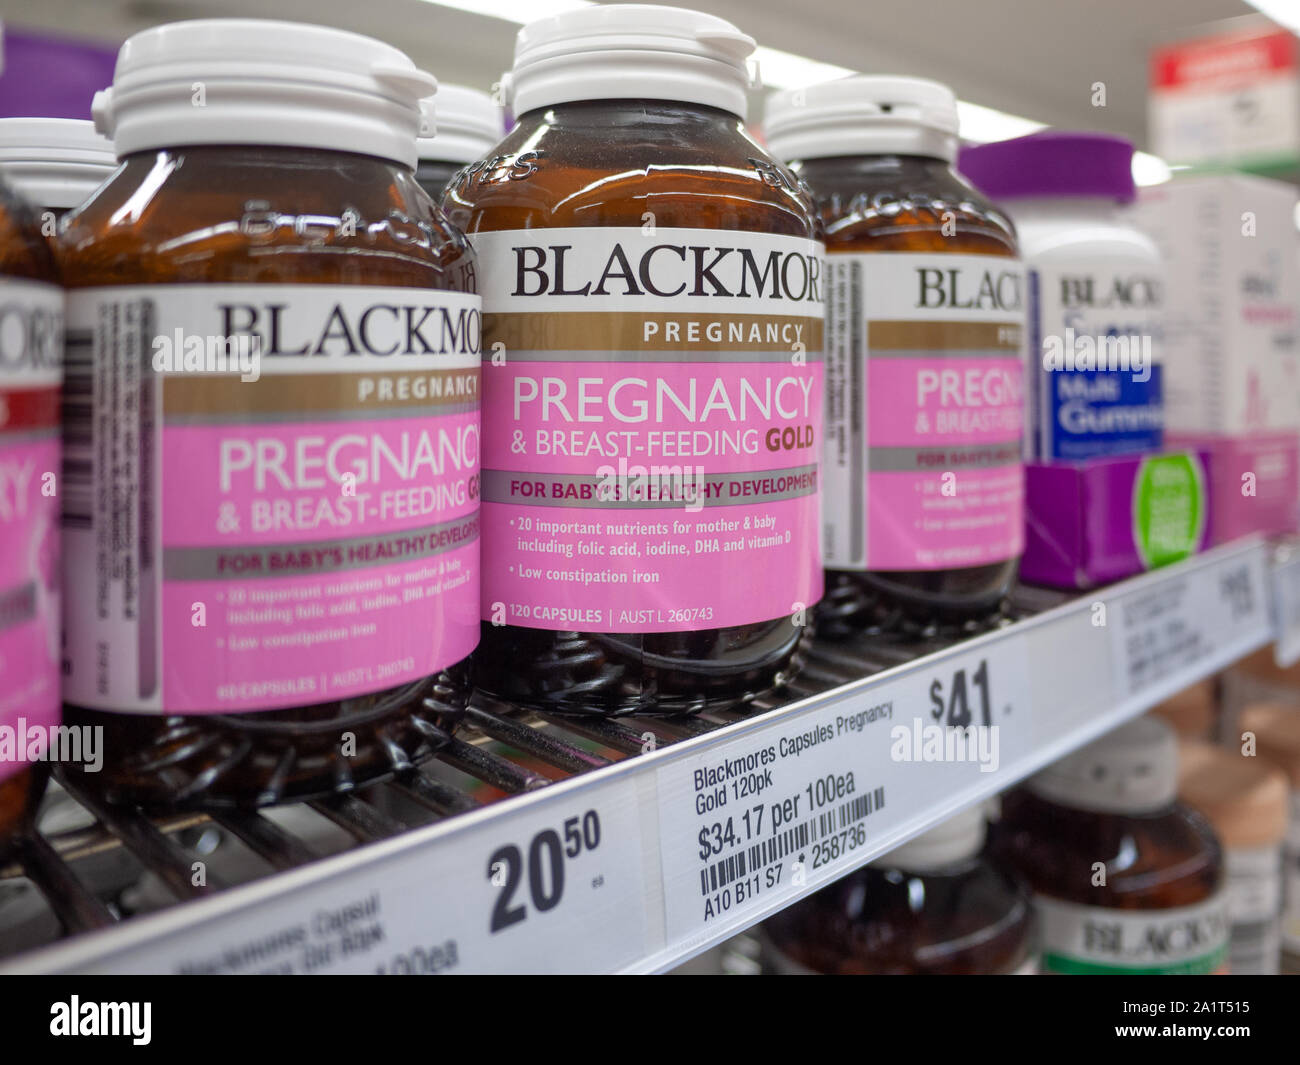 Blackmores pregnancy & breastfeeding gold vitamin capsules placed on a supermarket shelf. Melbourne, VIC Australia Stock Photo